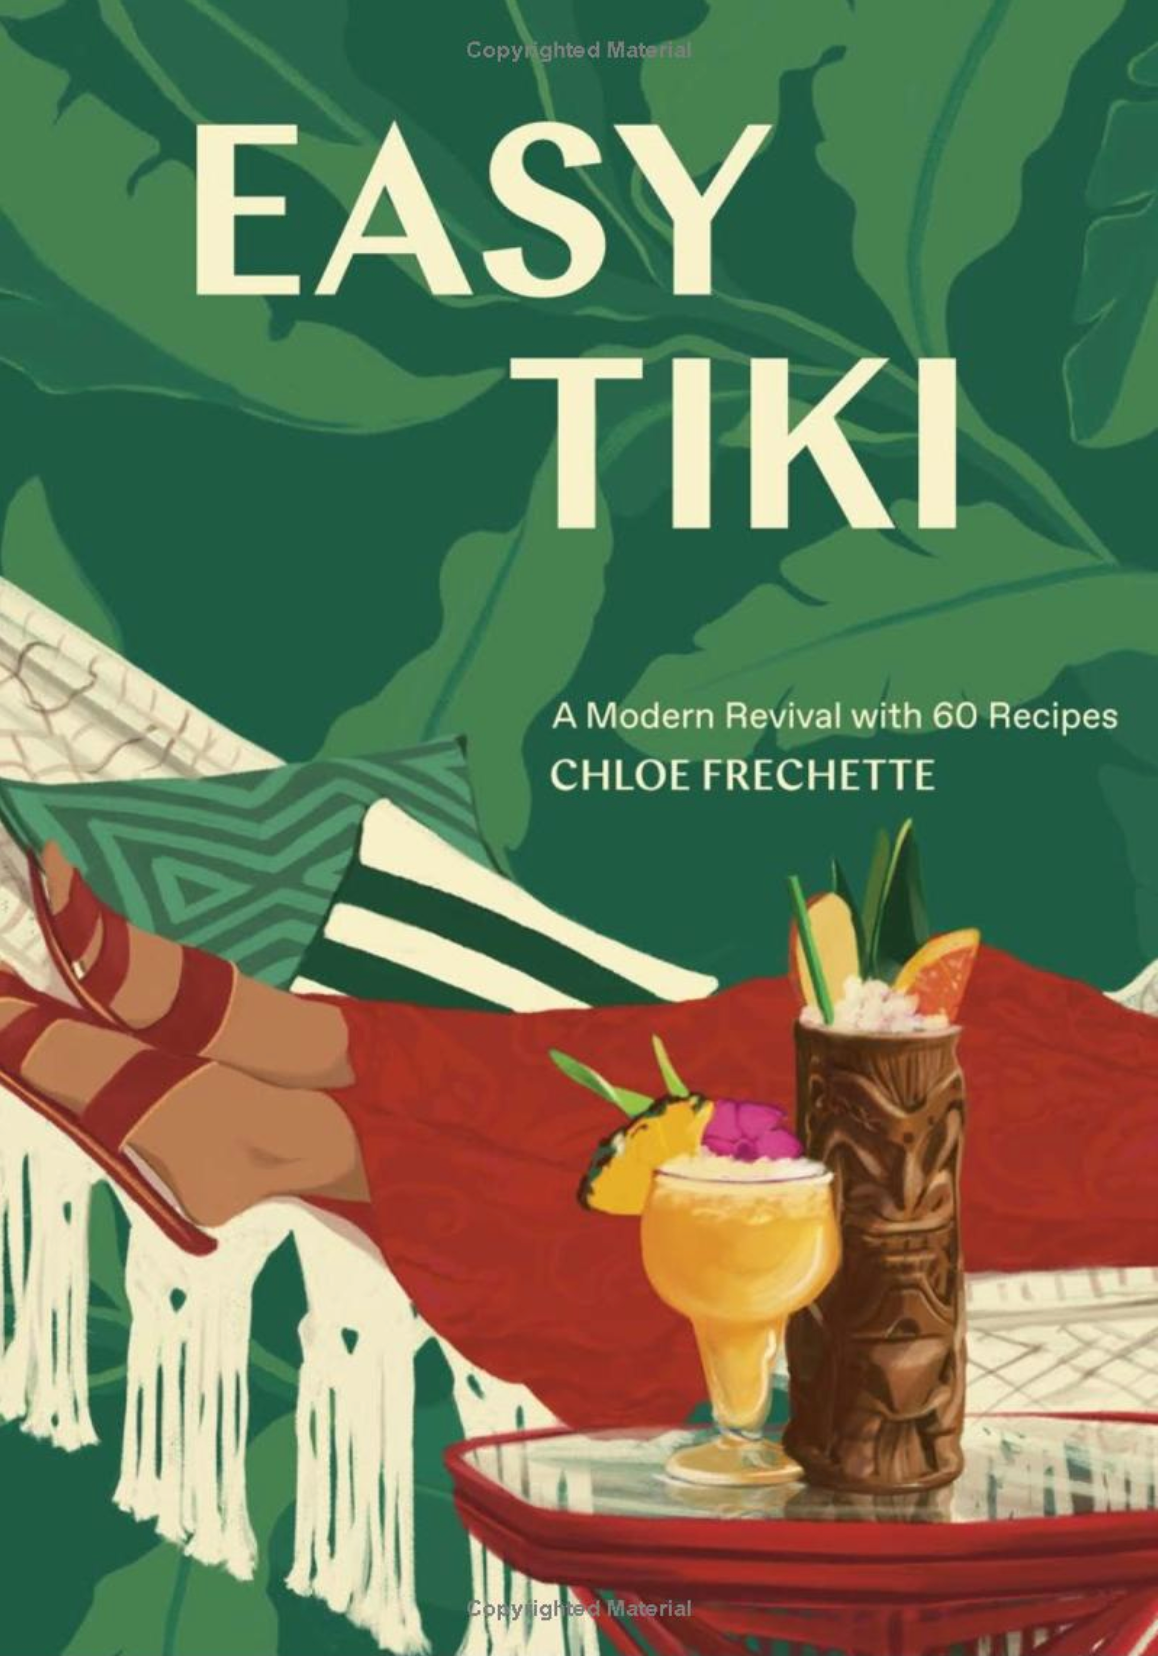 Easy Tiki: A modern Revival with 60 Recipes